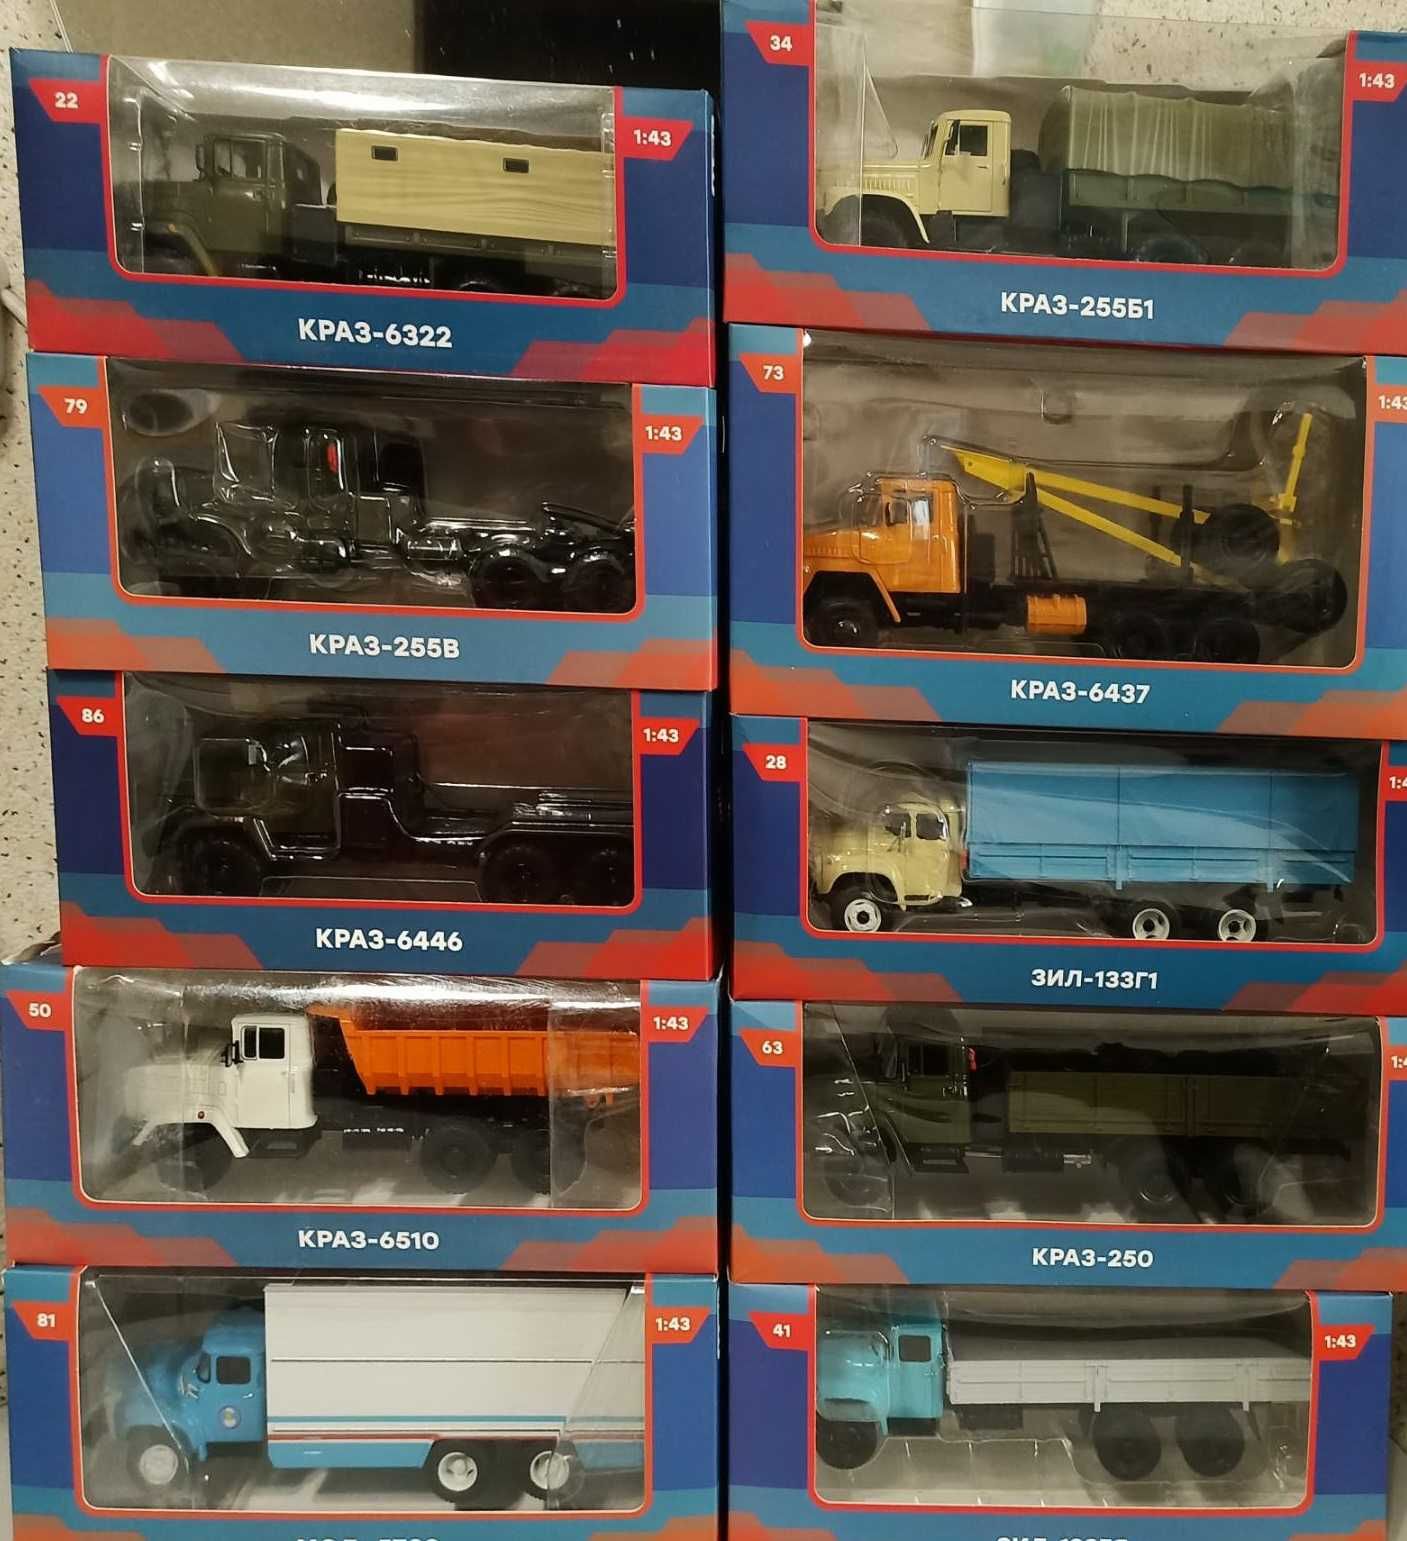 Модели из серии "Легендарные грузовики"- КрАЗ, ГАЗ, ЗИЛ, МАЗ